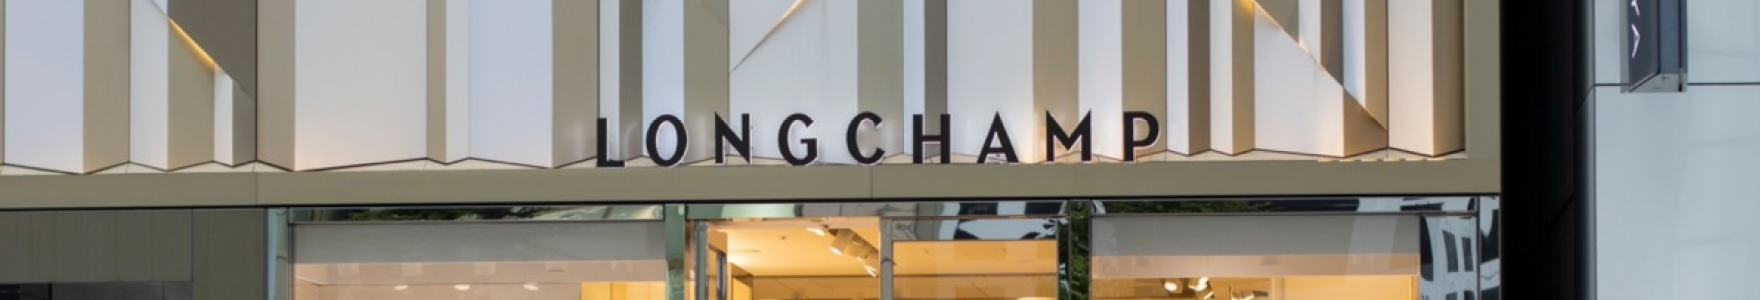 Longchamp 背景